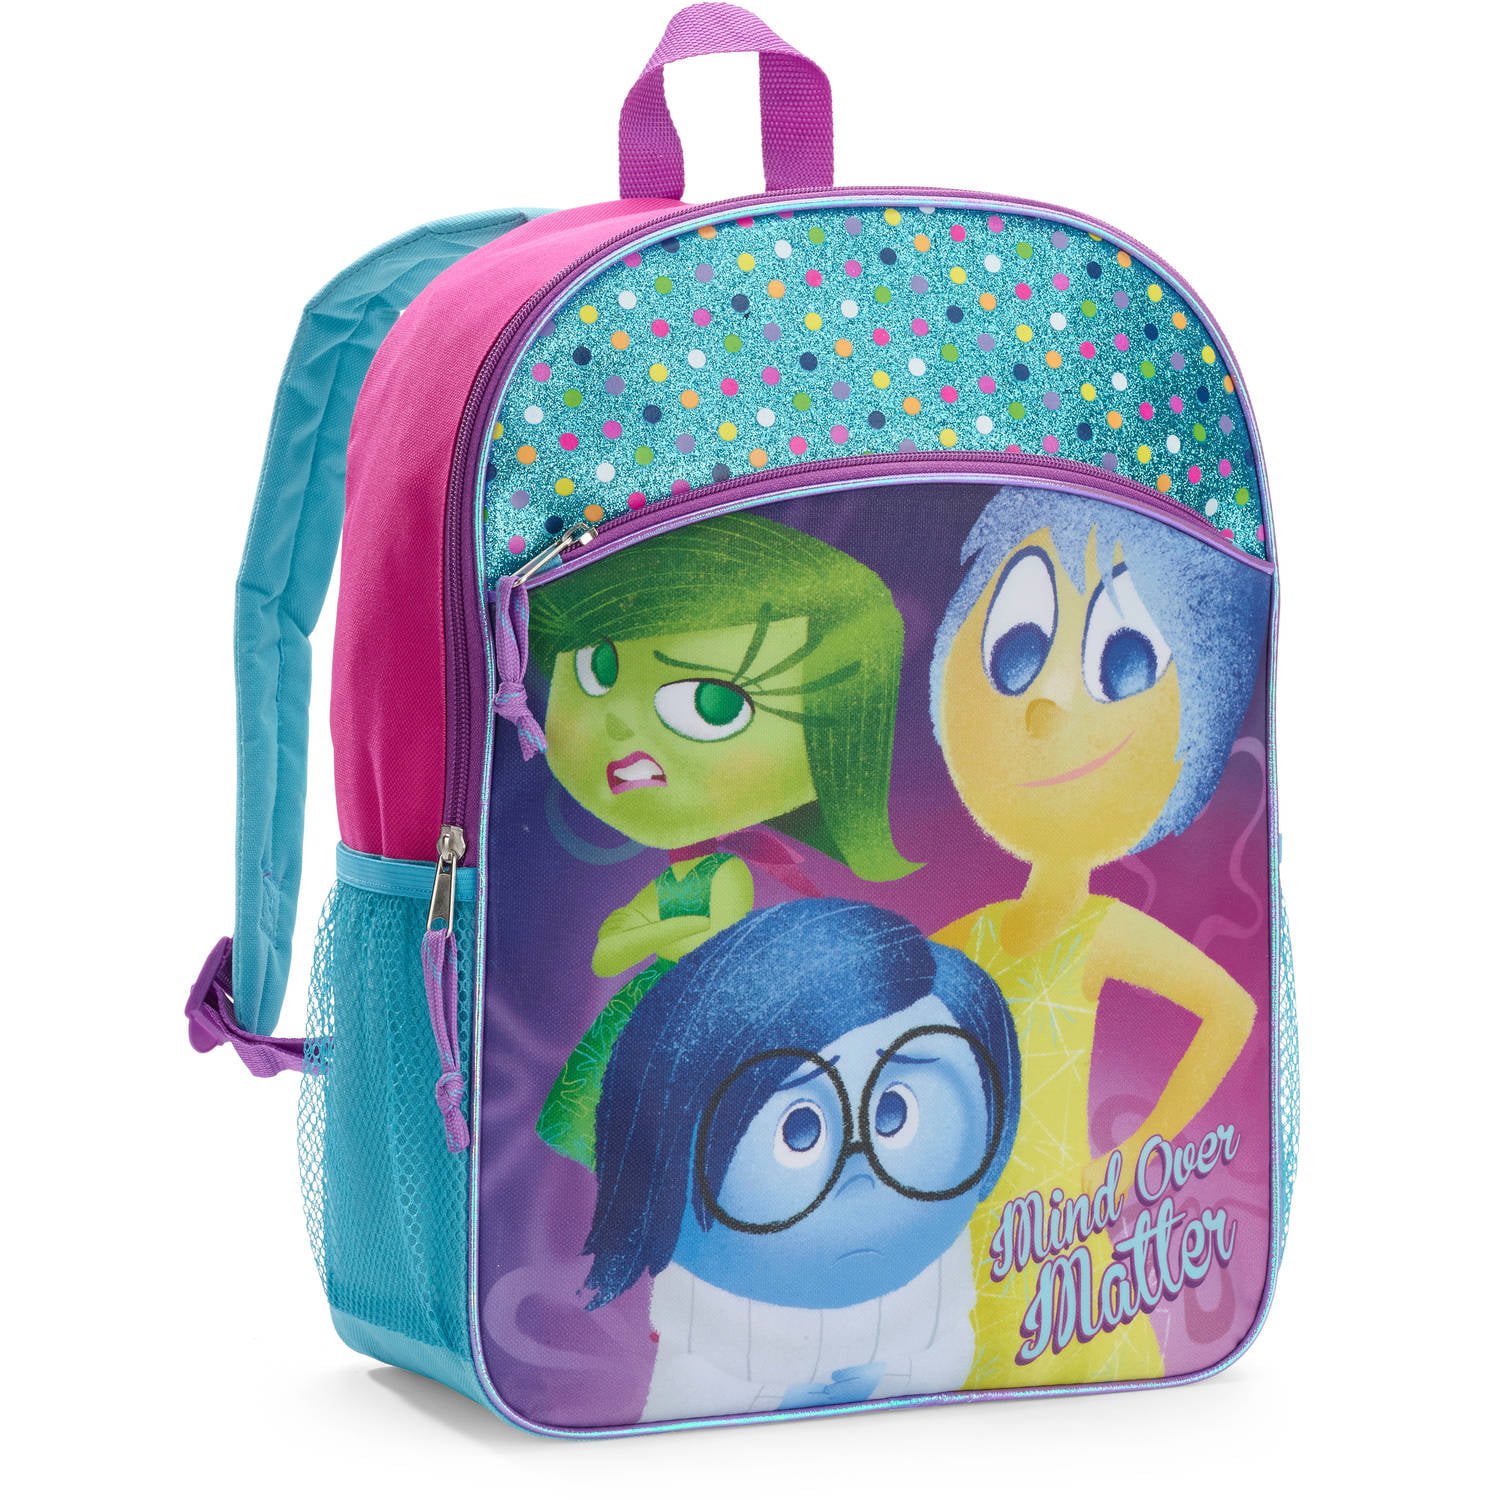 Disney Inside Out 16" Large School Backpack Lunch Bag 2pc Set 